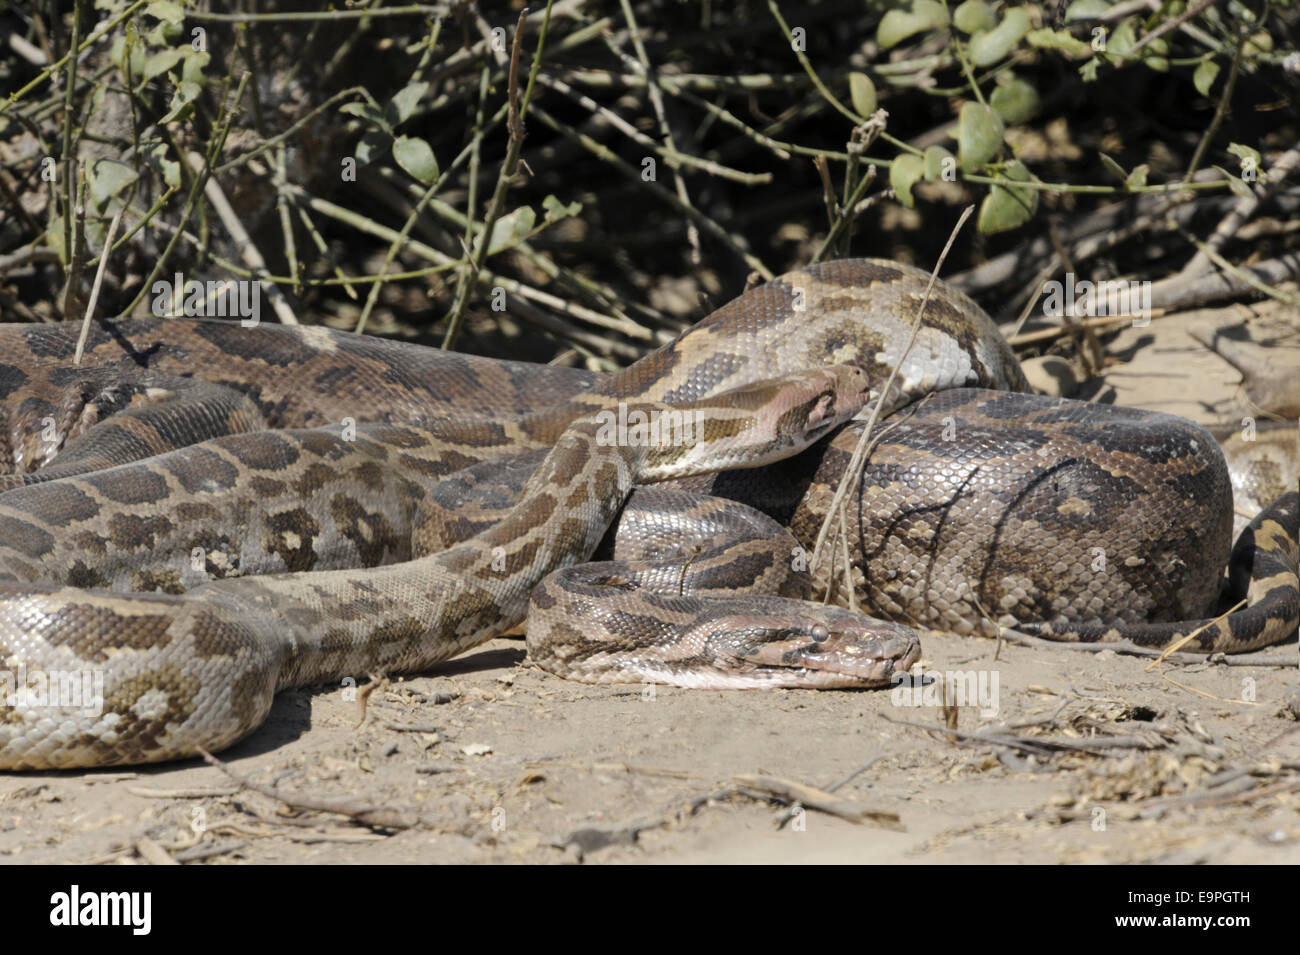 Indian Python - Python molurus Foto de stock